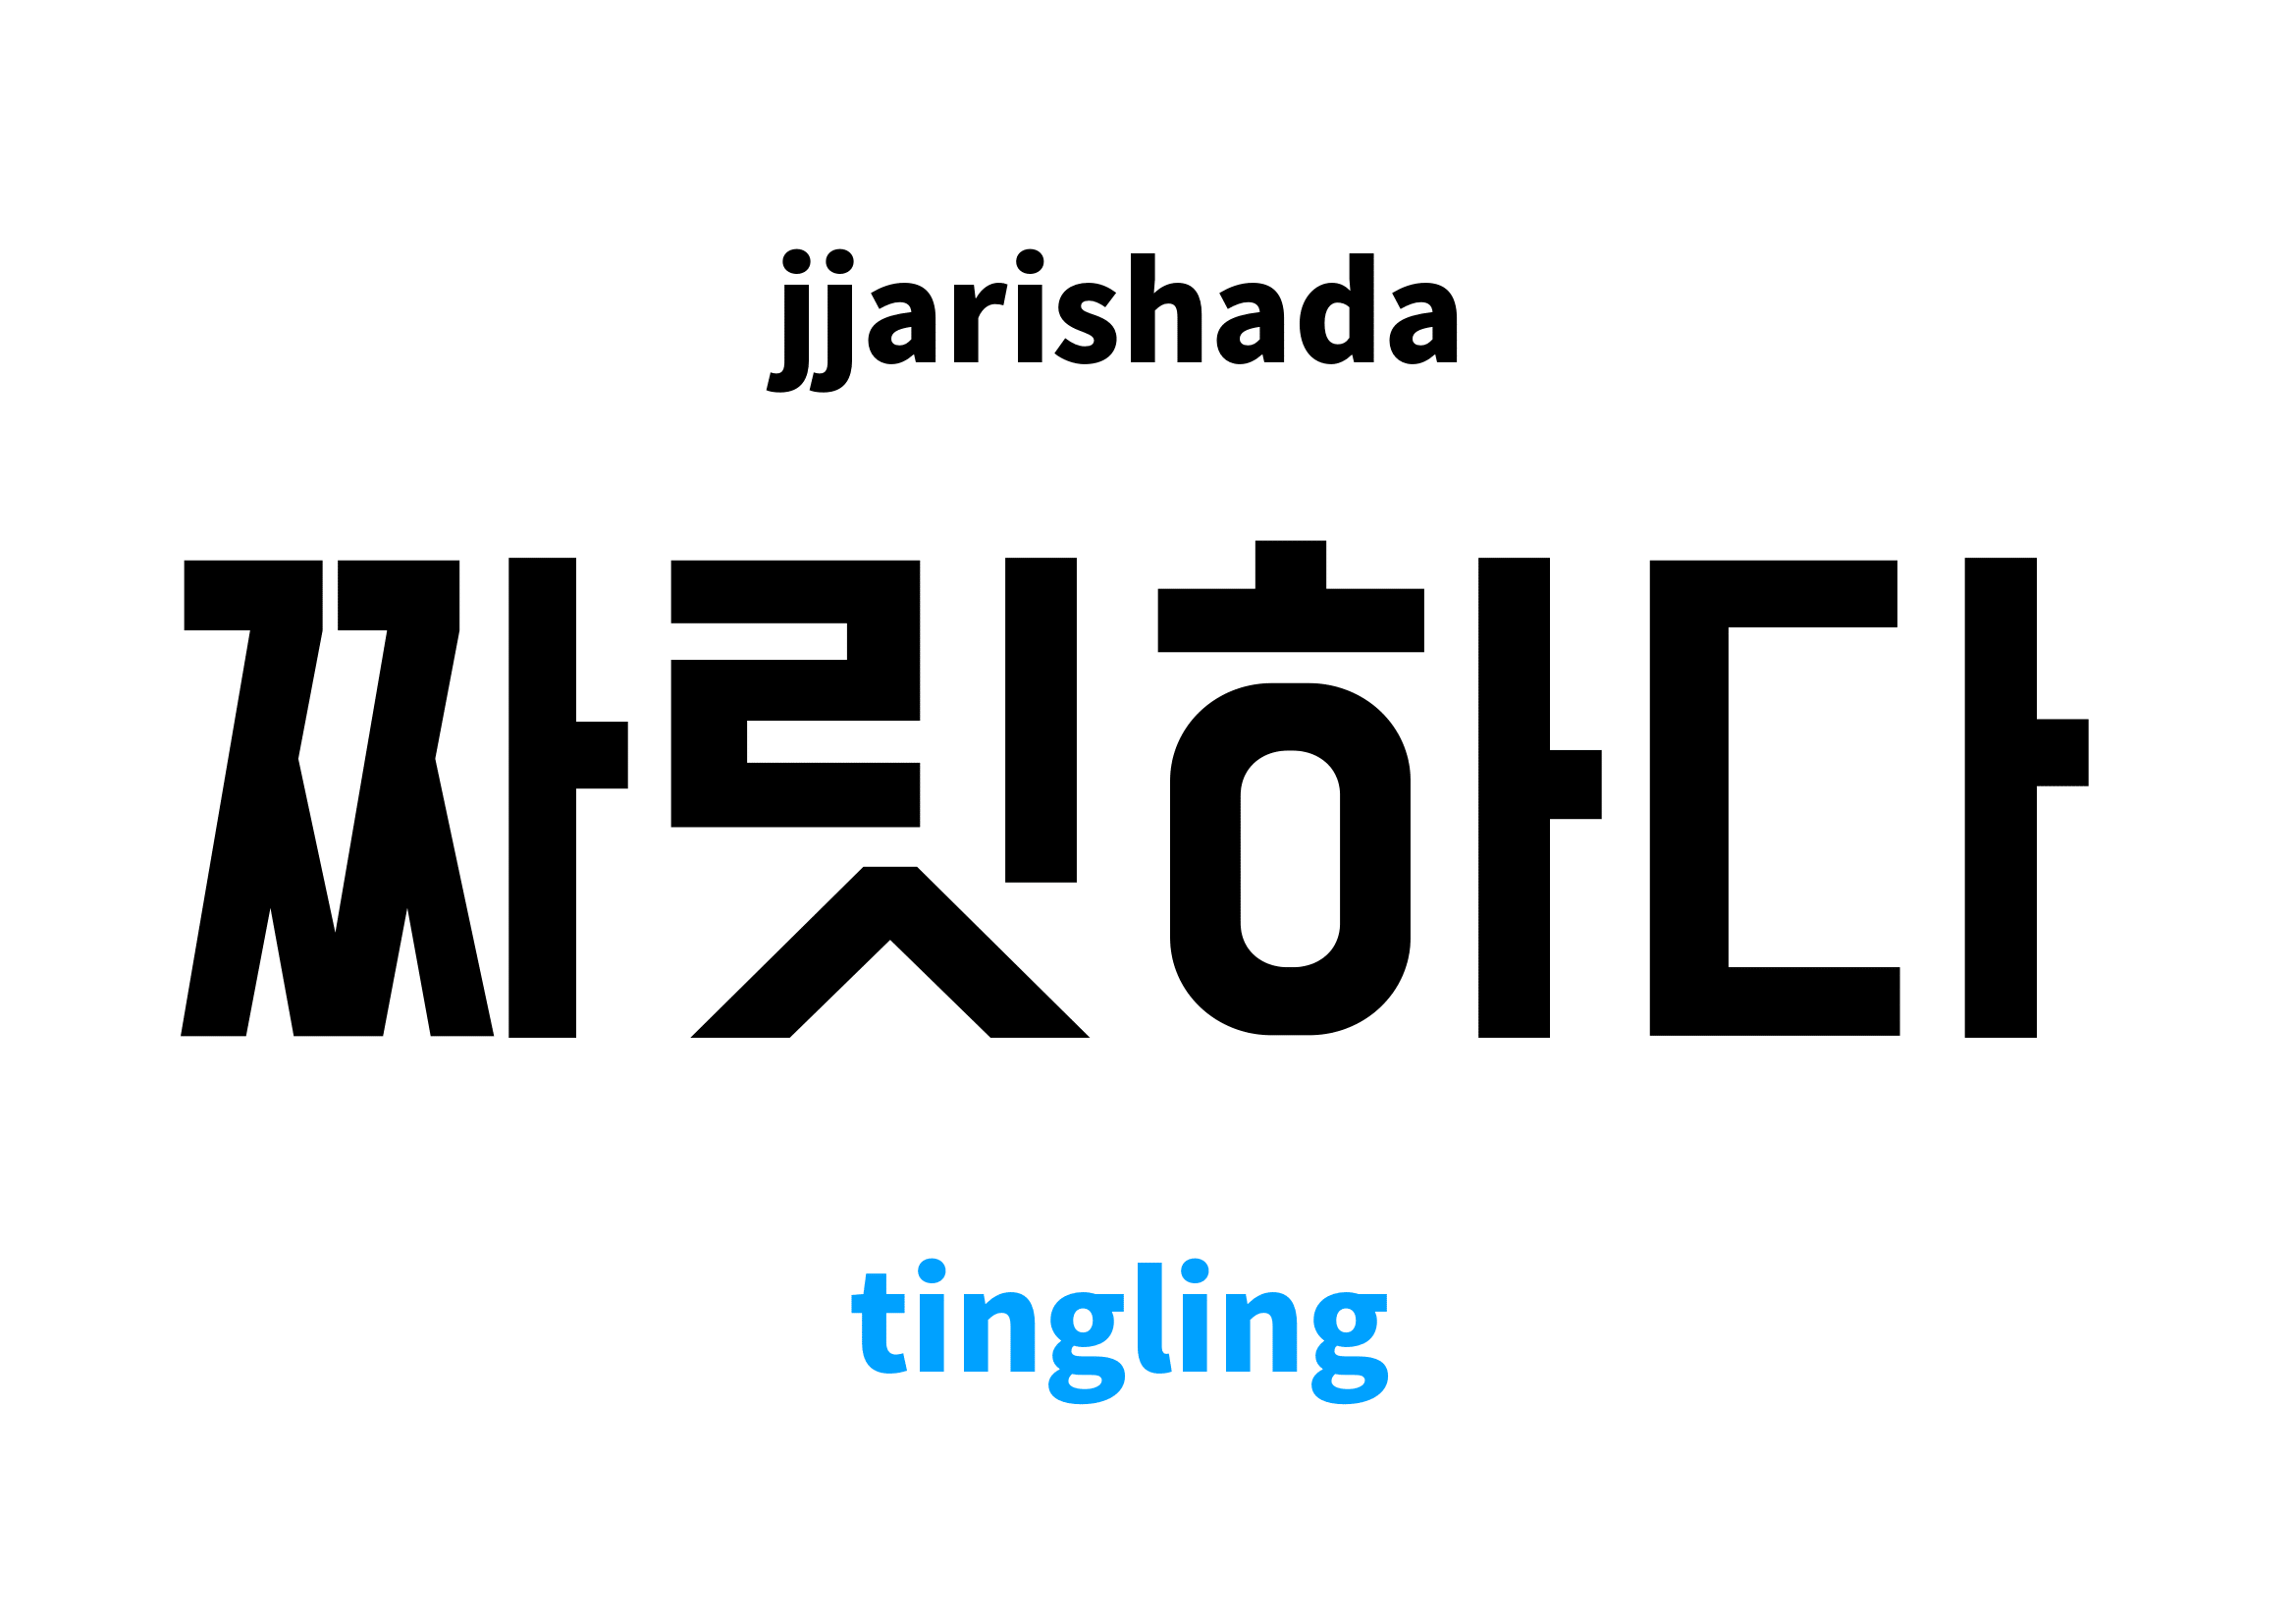 tingling in Korean, 짜릿하다 meaning